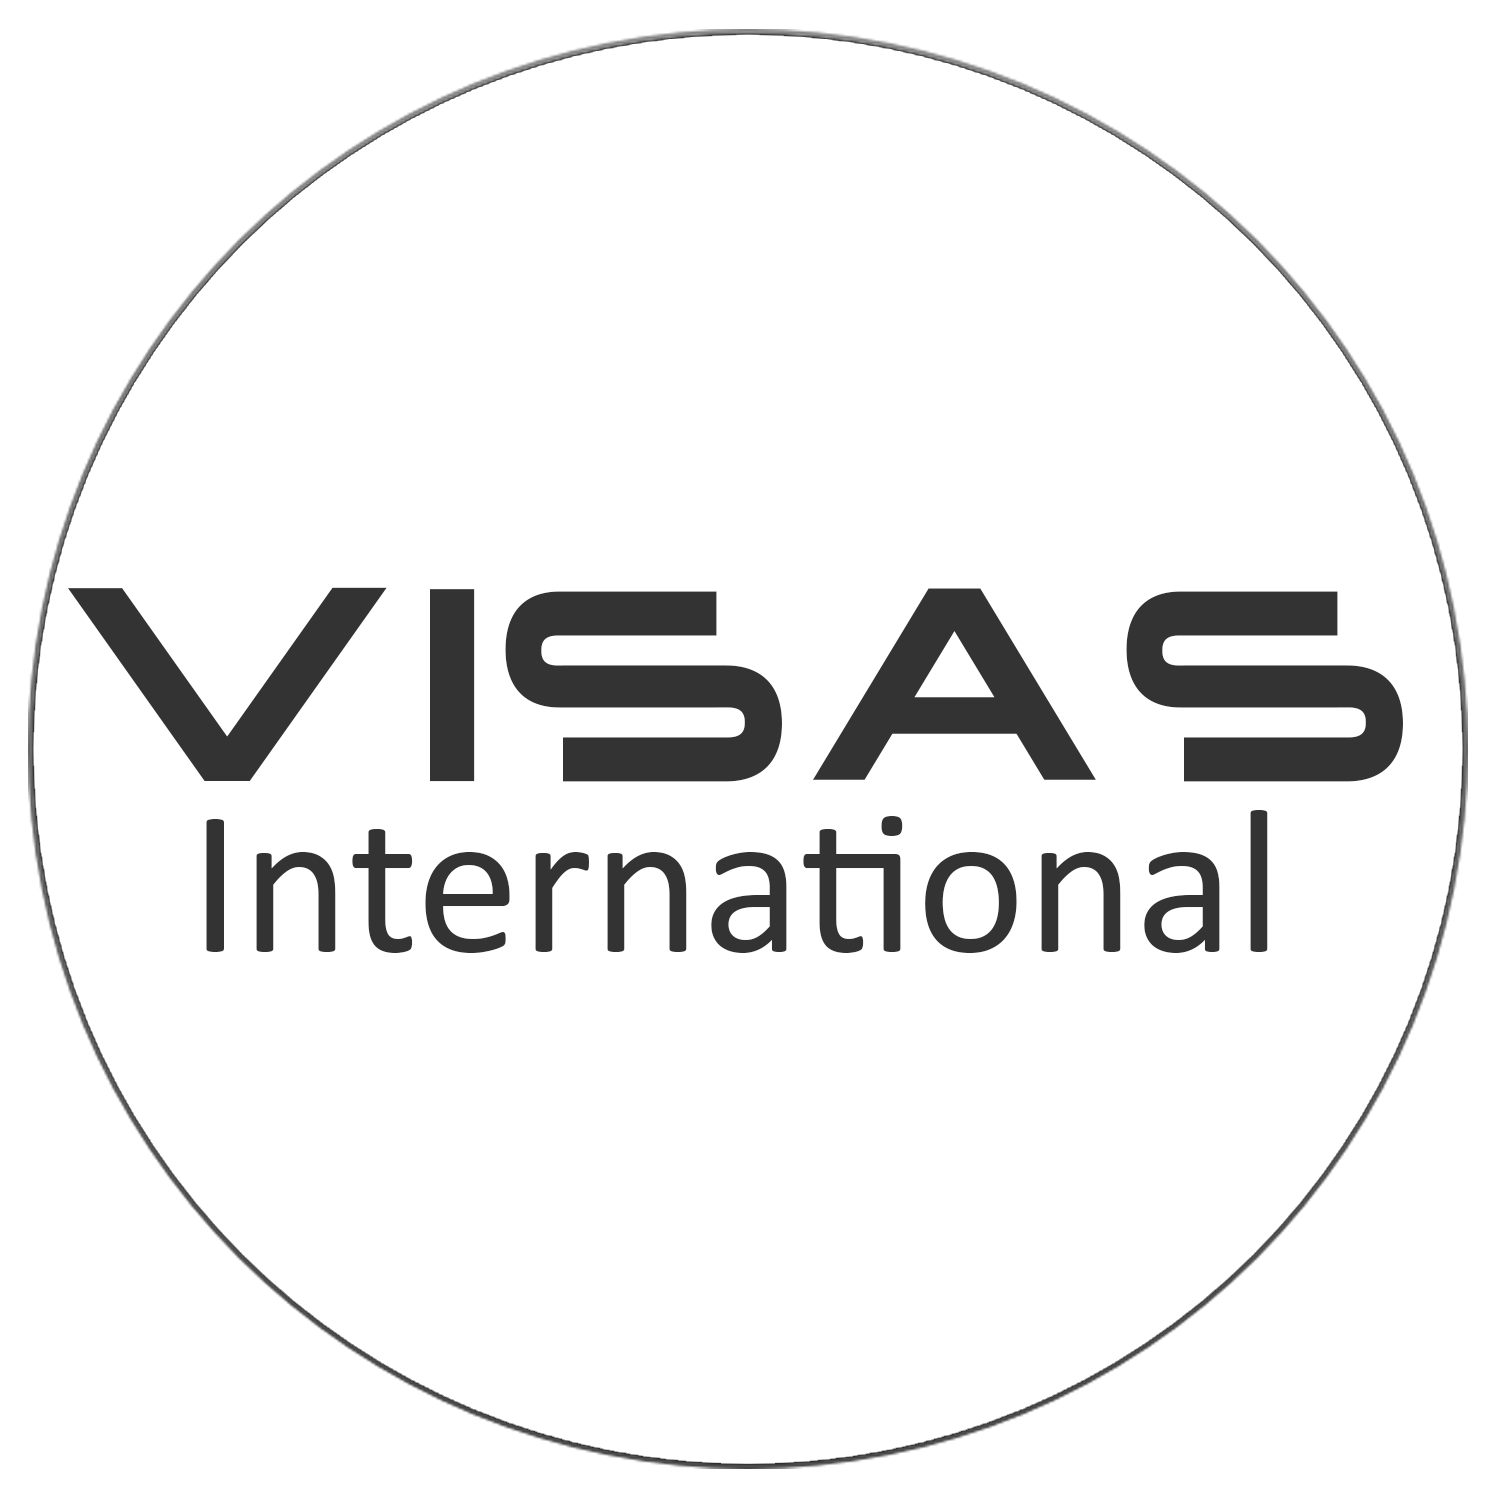 Visas International logo